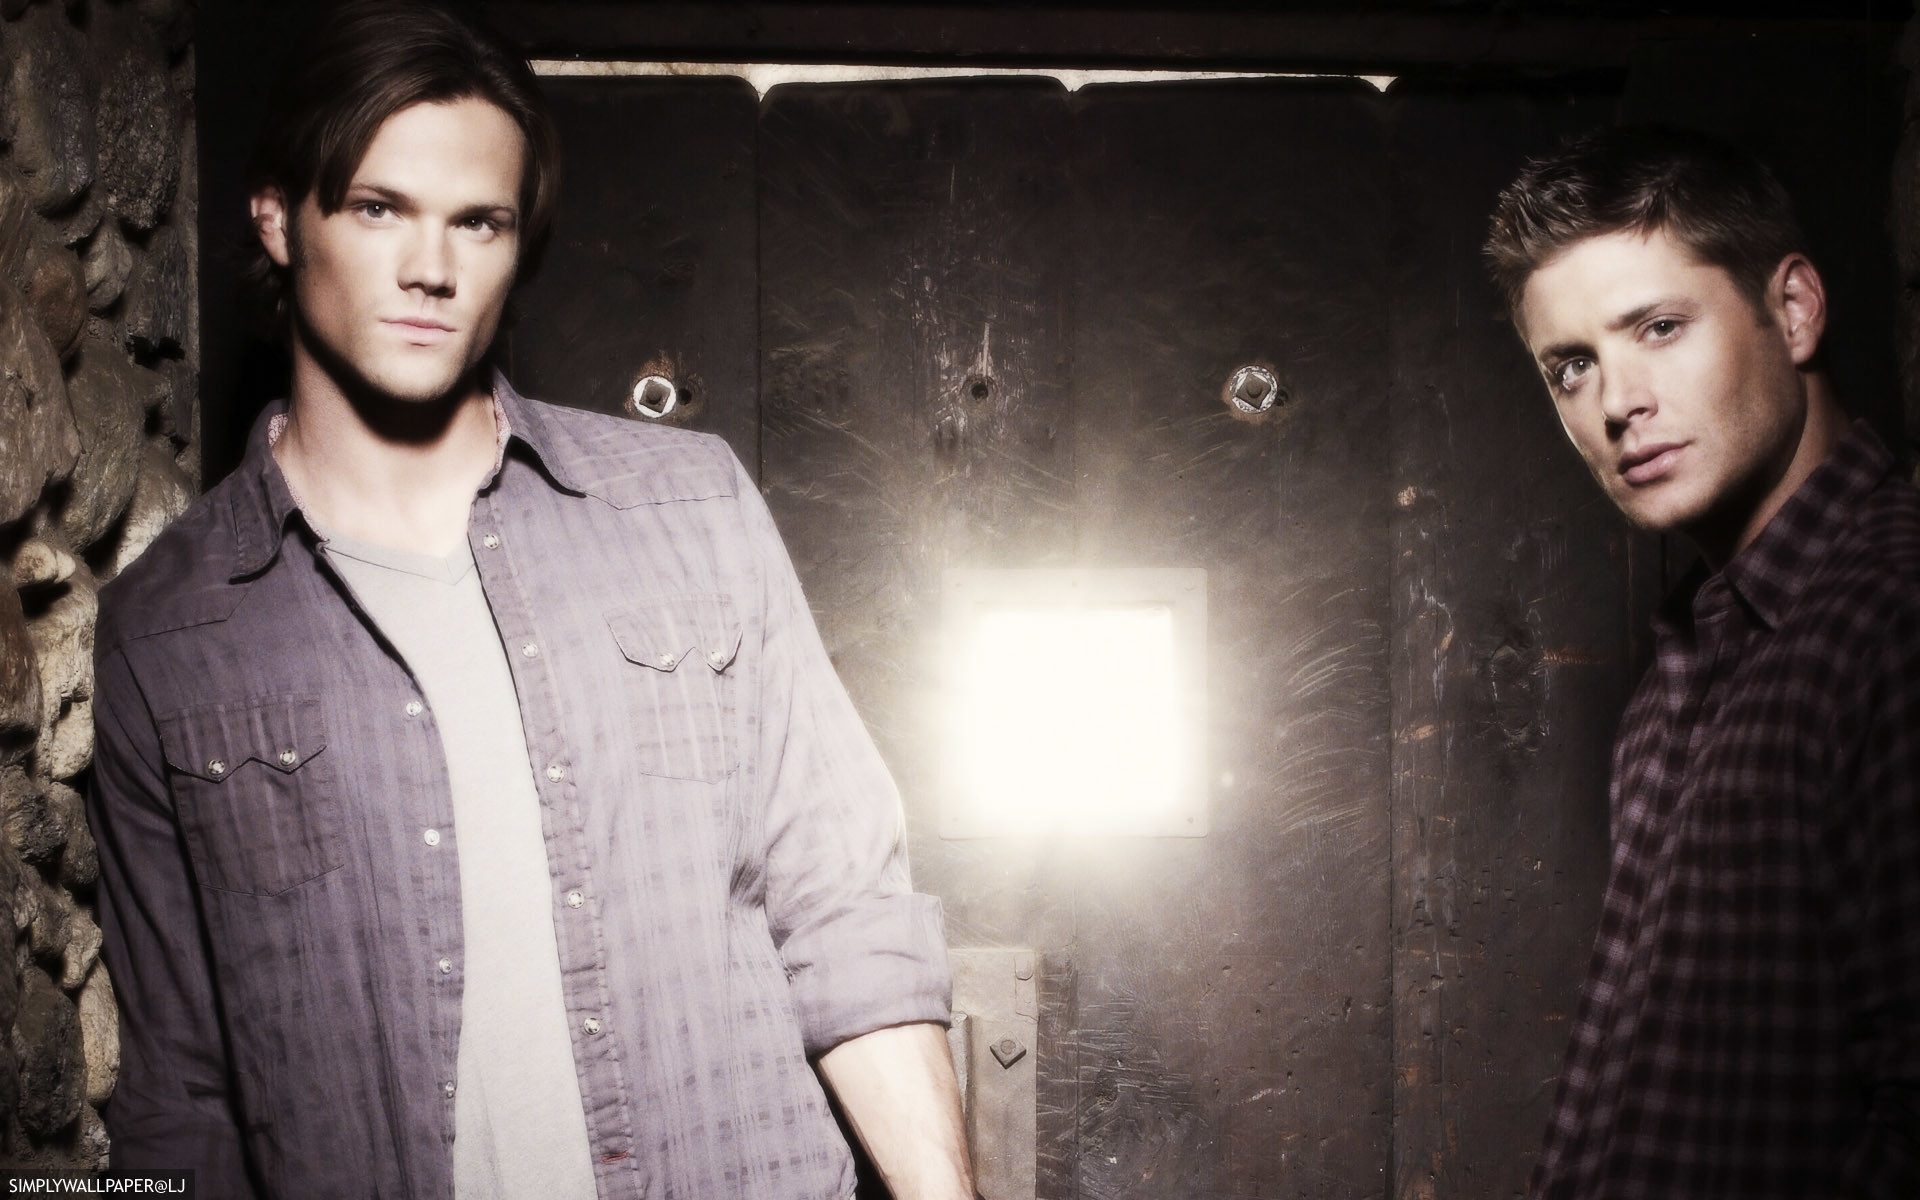 Supernatural desktop background / wallpaper – Sam and Dean Winchester –  credit: simplywallpaper@historyjunkie